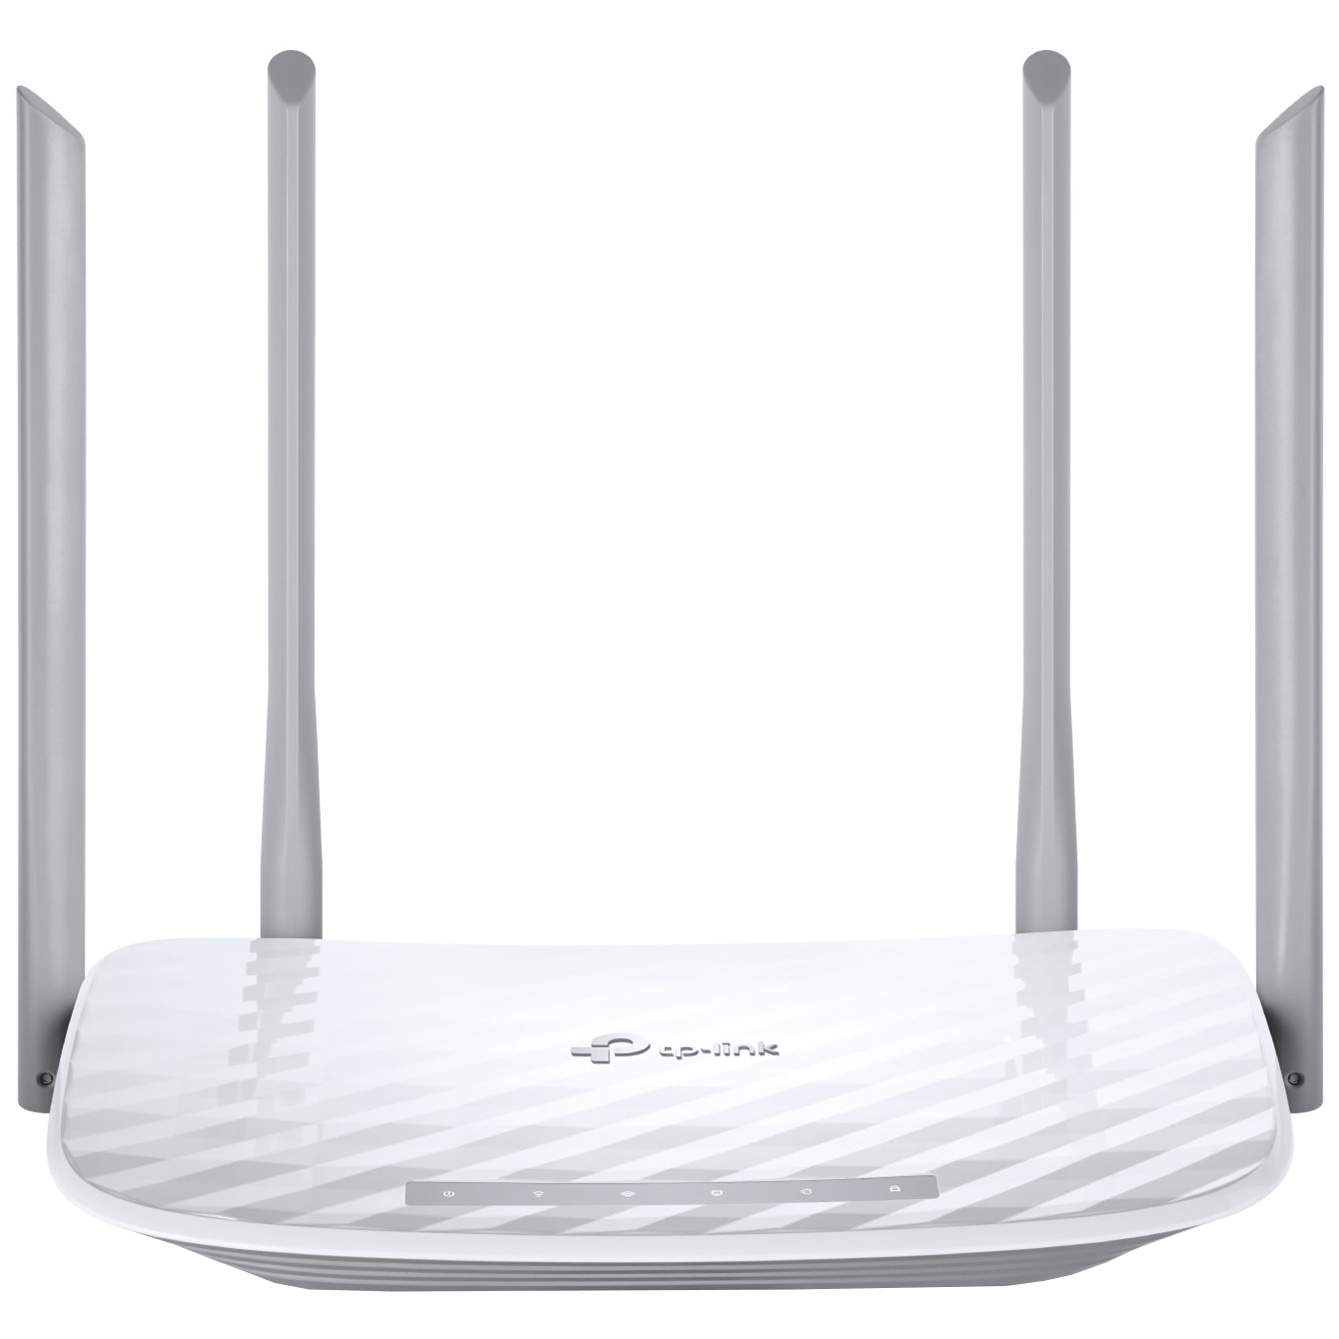 Wi-Fi роутер TP-LINK Archer C50(RU), белый, Wi-Fi роутер TP-LINK Archer C50(RU), белый - характеристики и описание на Мегамаркет